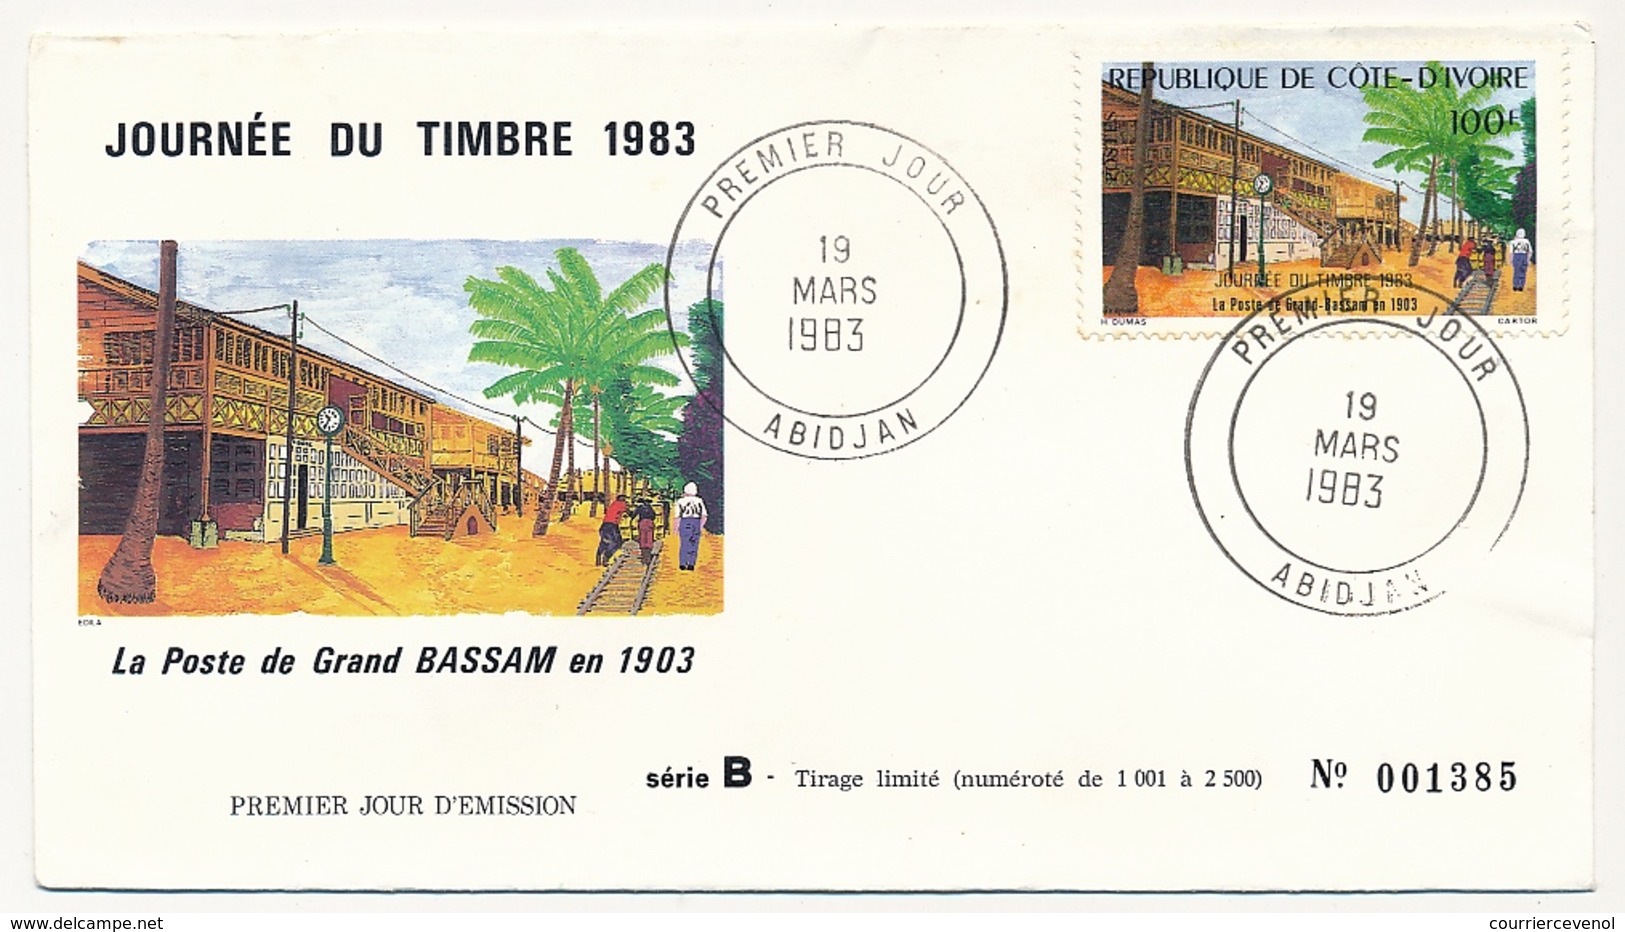 Côte D'Ivoire => Enveloppe FDC - 100f La Poste De Grand Bassam En 1903 - ABIDJAN - 19 Mars 1983 - Ivory Coast (1960-...)